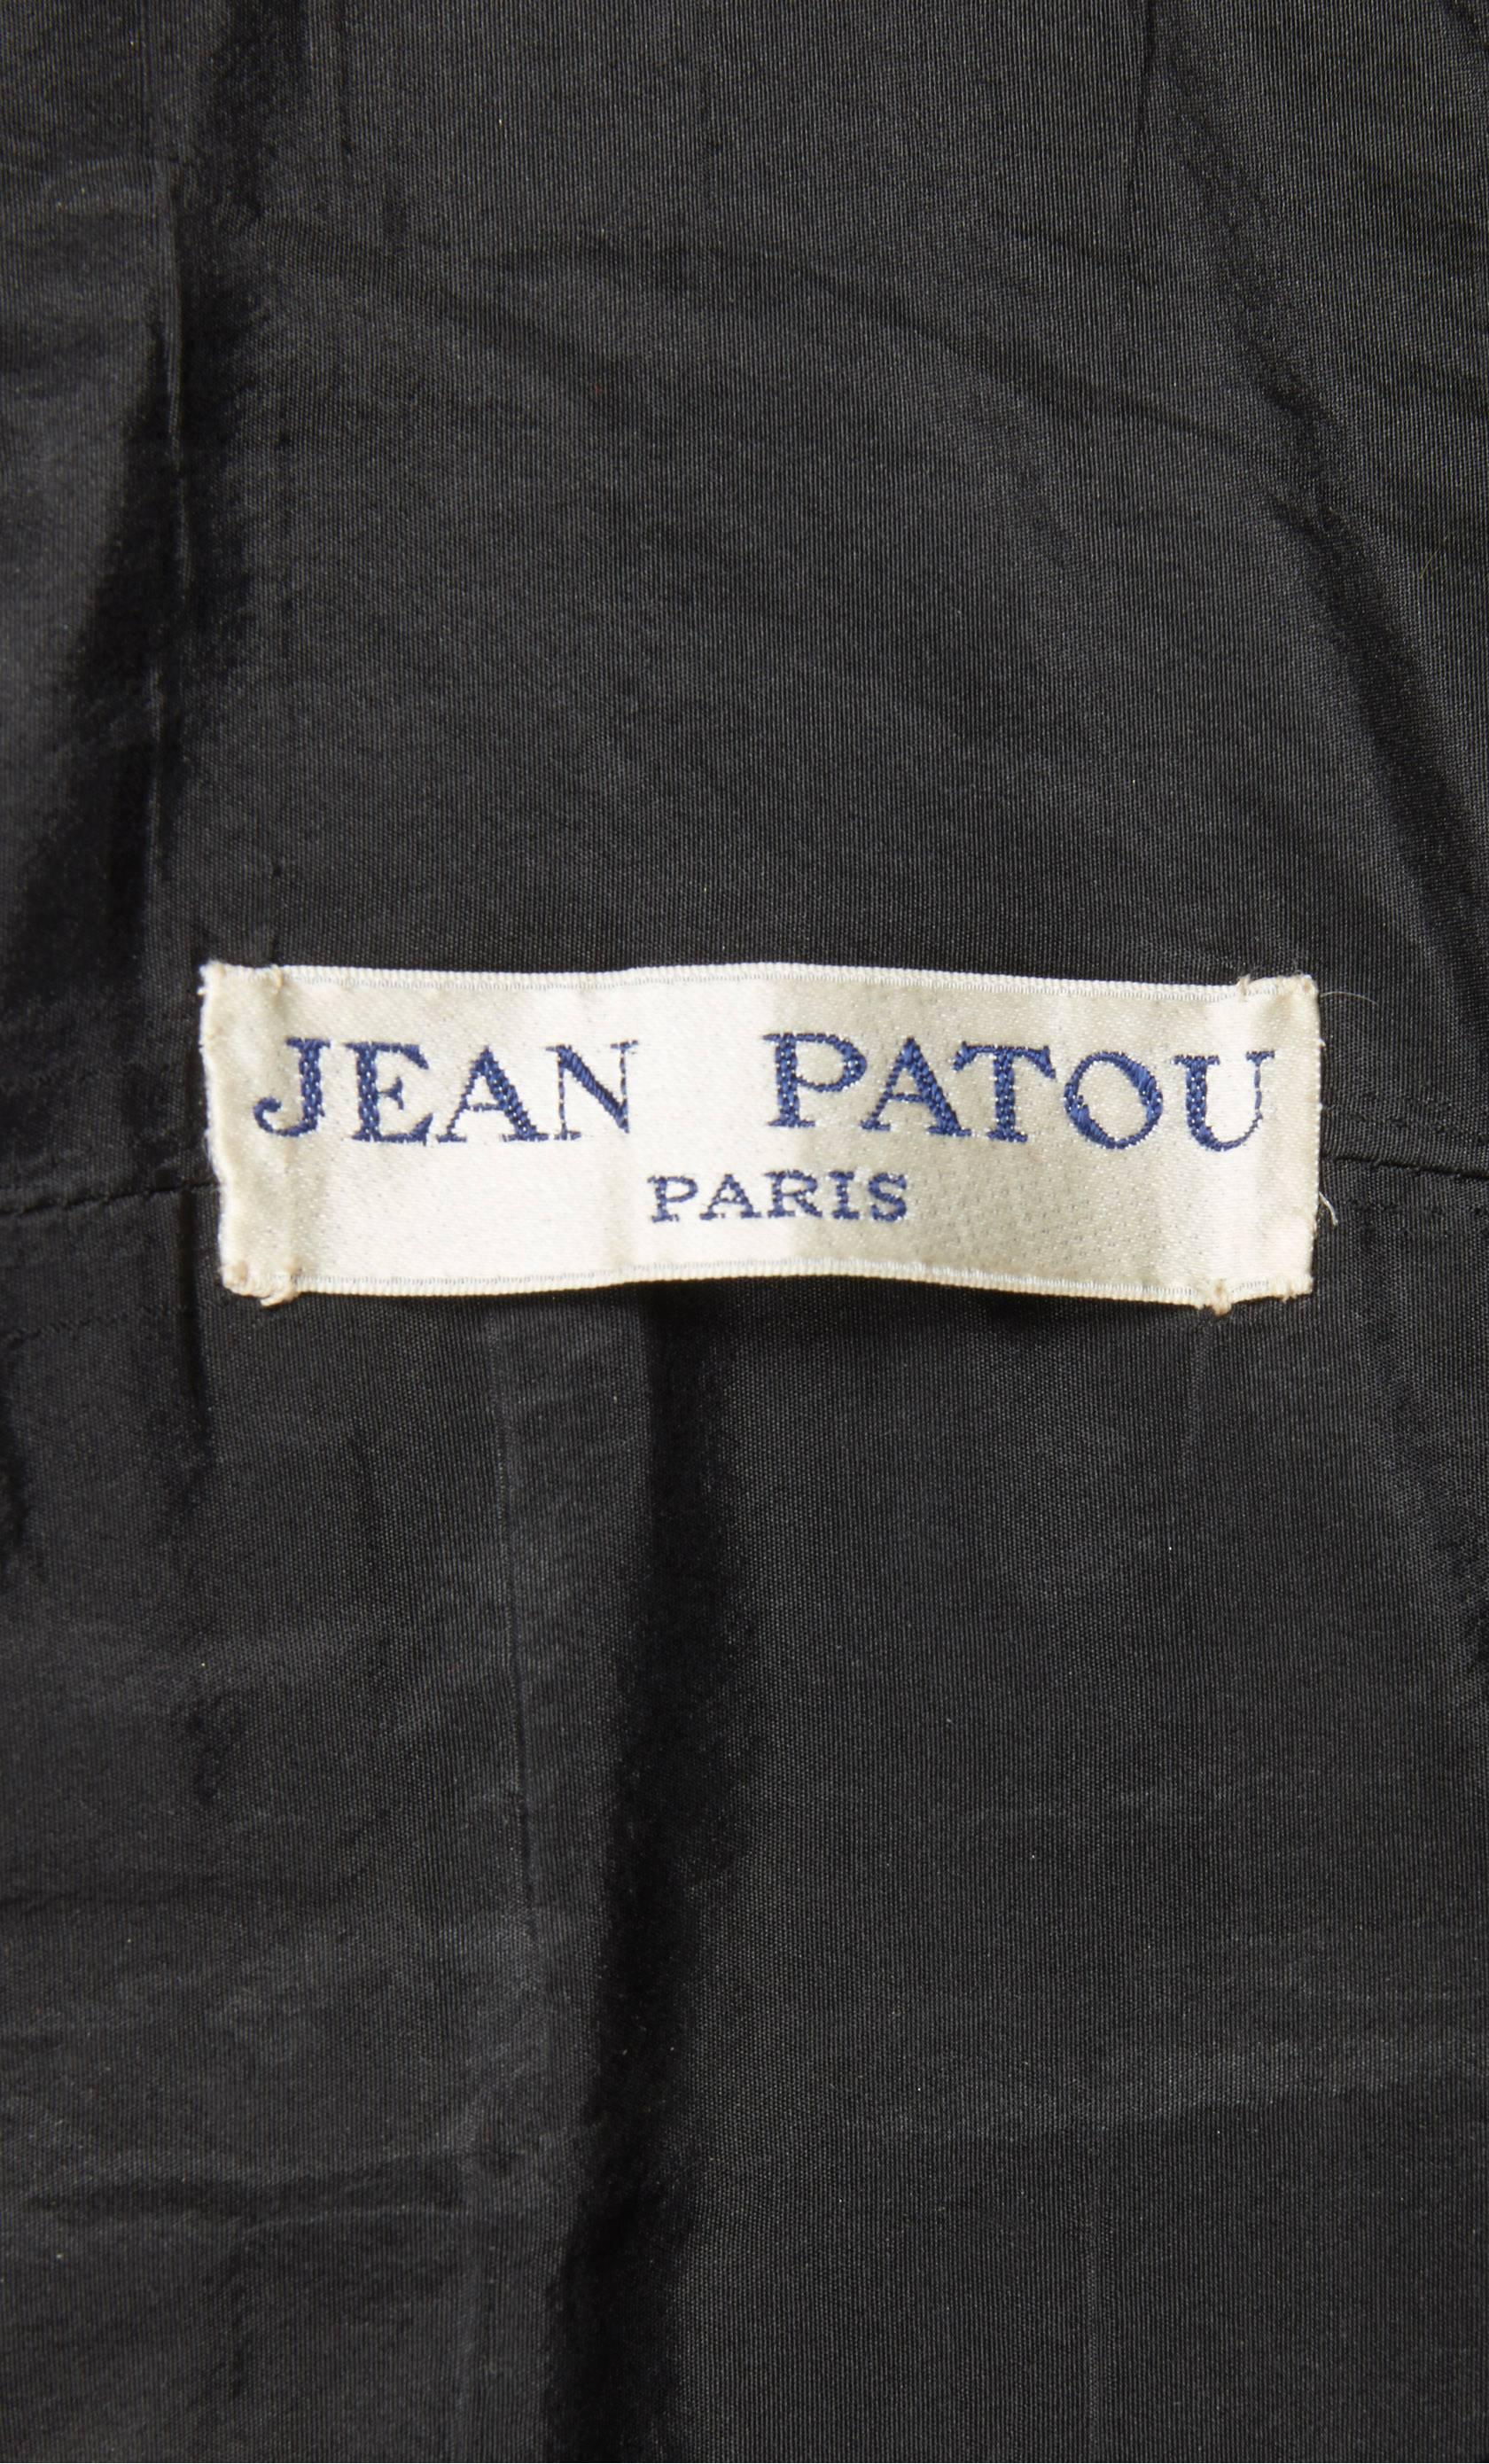 Jean Patou by Christian Lacroix black sequin dress, circa 1986 1